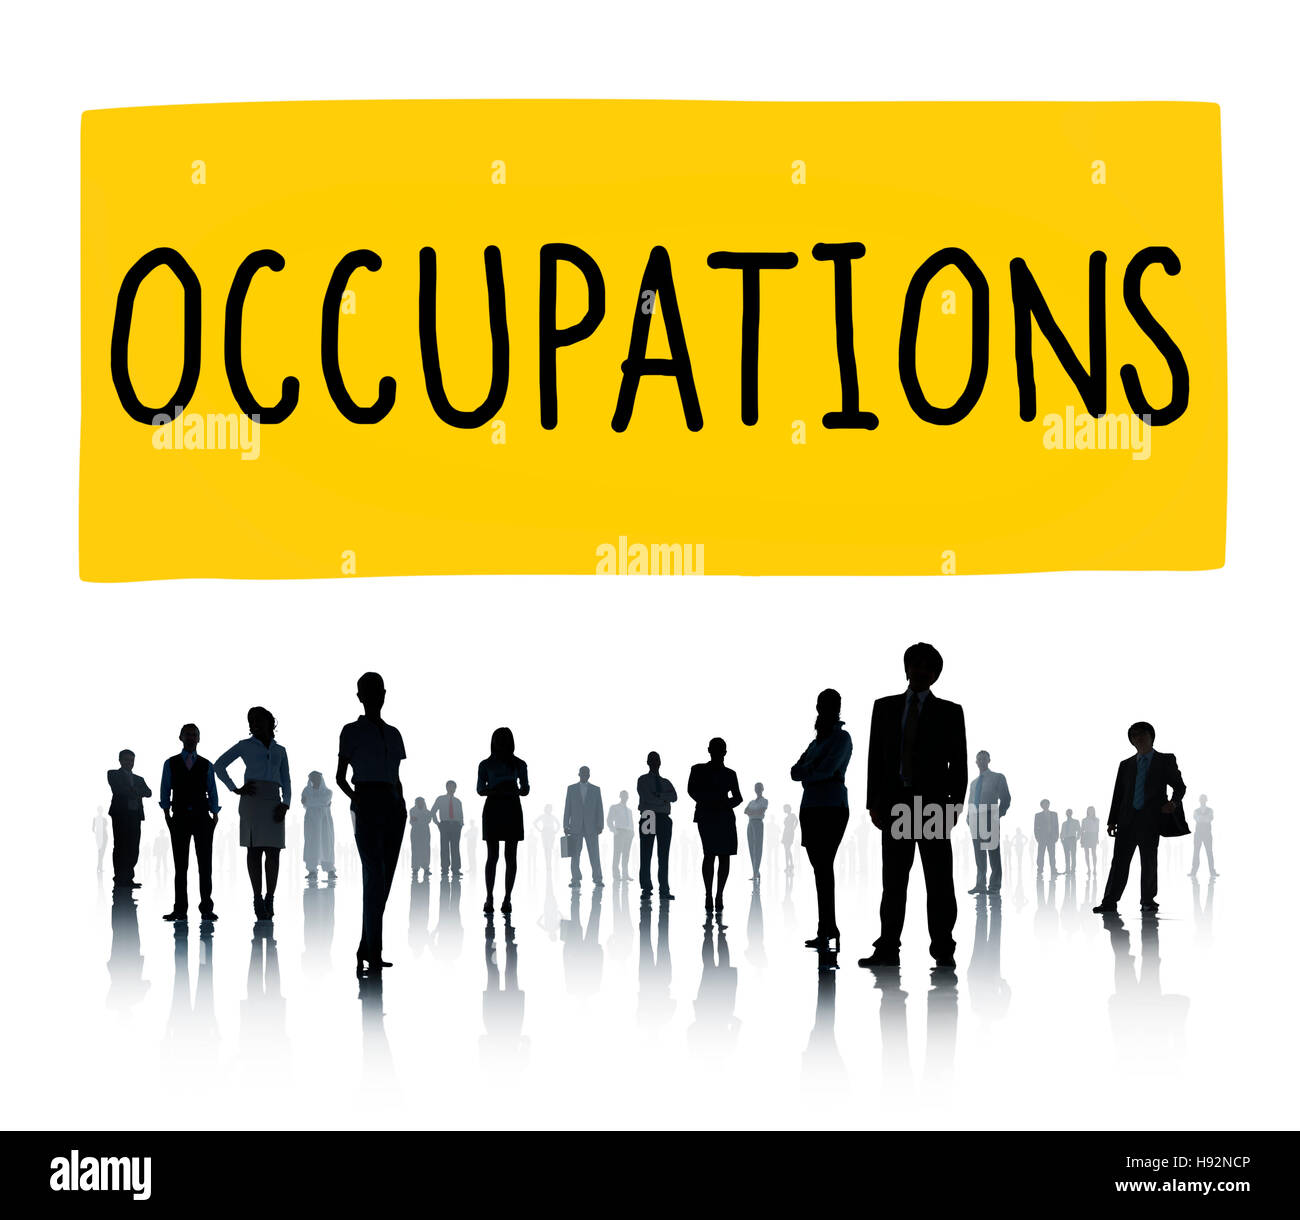 Occupation Job Career Employment Hiring Recruiting Concept Stock Photo